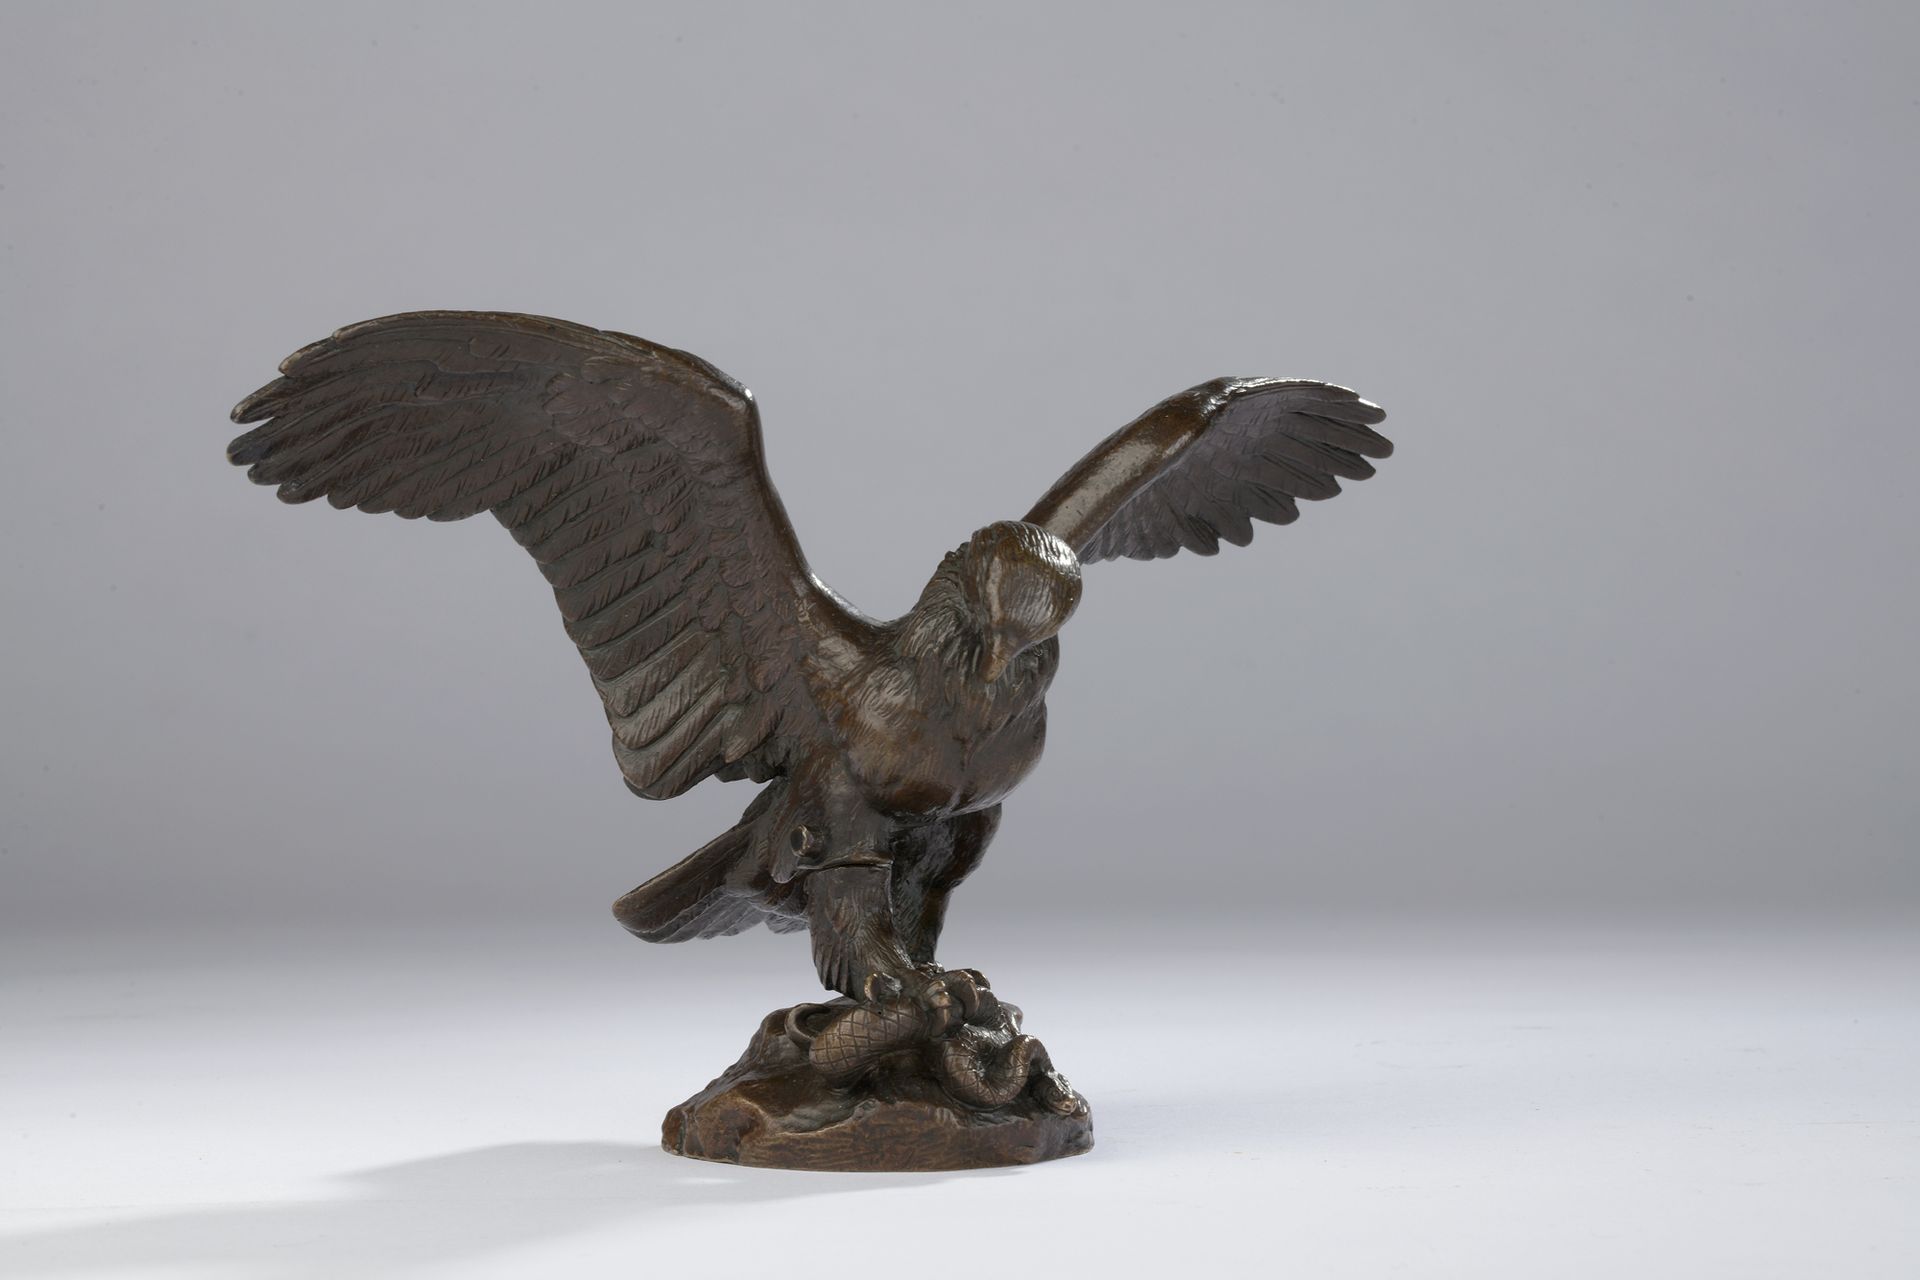 Null 安东尼-路易-巴耶 (1795-1875)

老鹰背着一条蛇

有浅棕色铜锈的青铜器 岩石上有 "BARYE "签名

内侧印有两次数字 "19"，这&hellip;